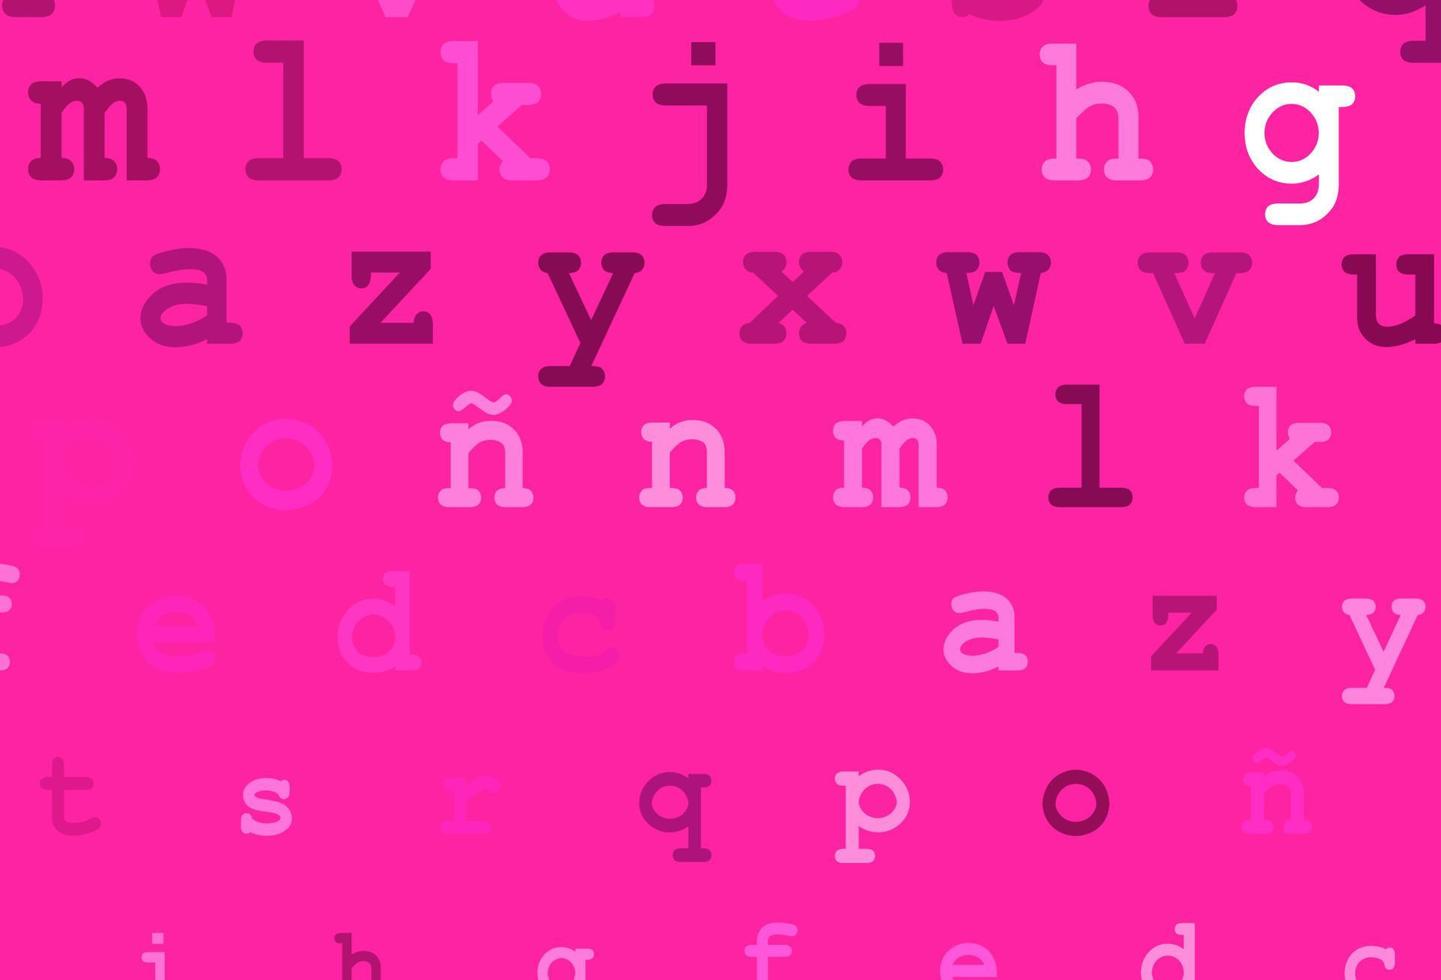 layout de vetor rosa claro com alfabeto latino.